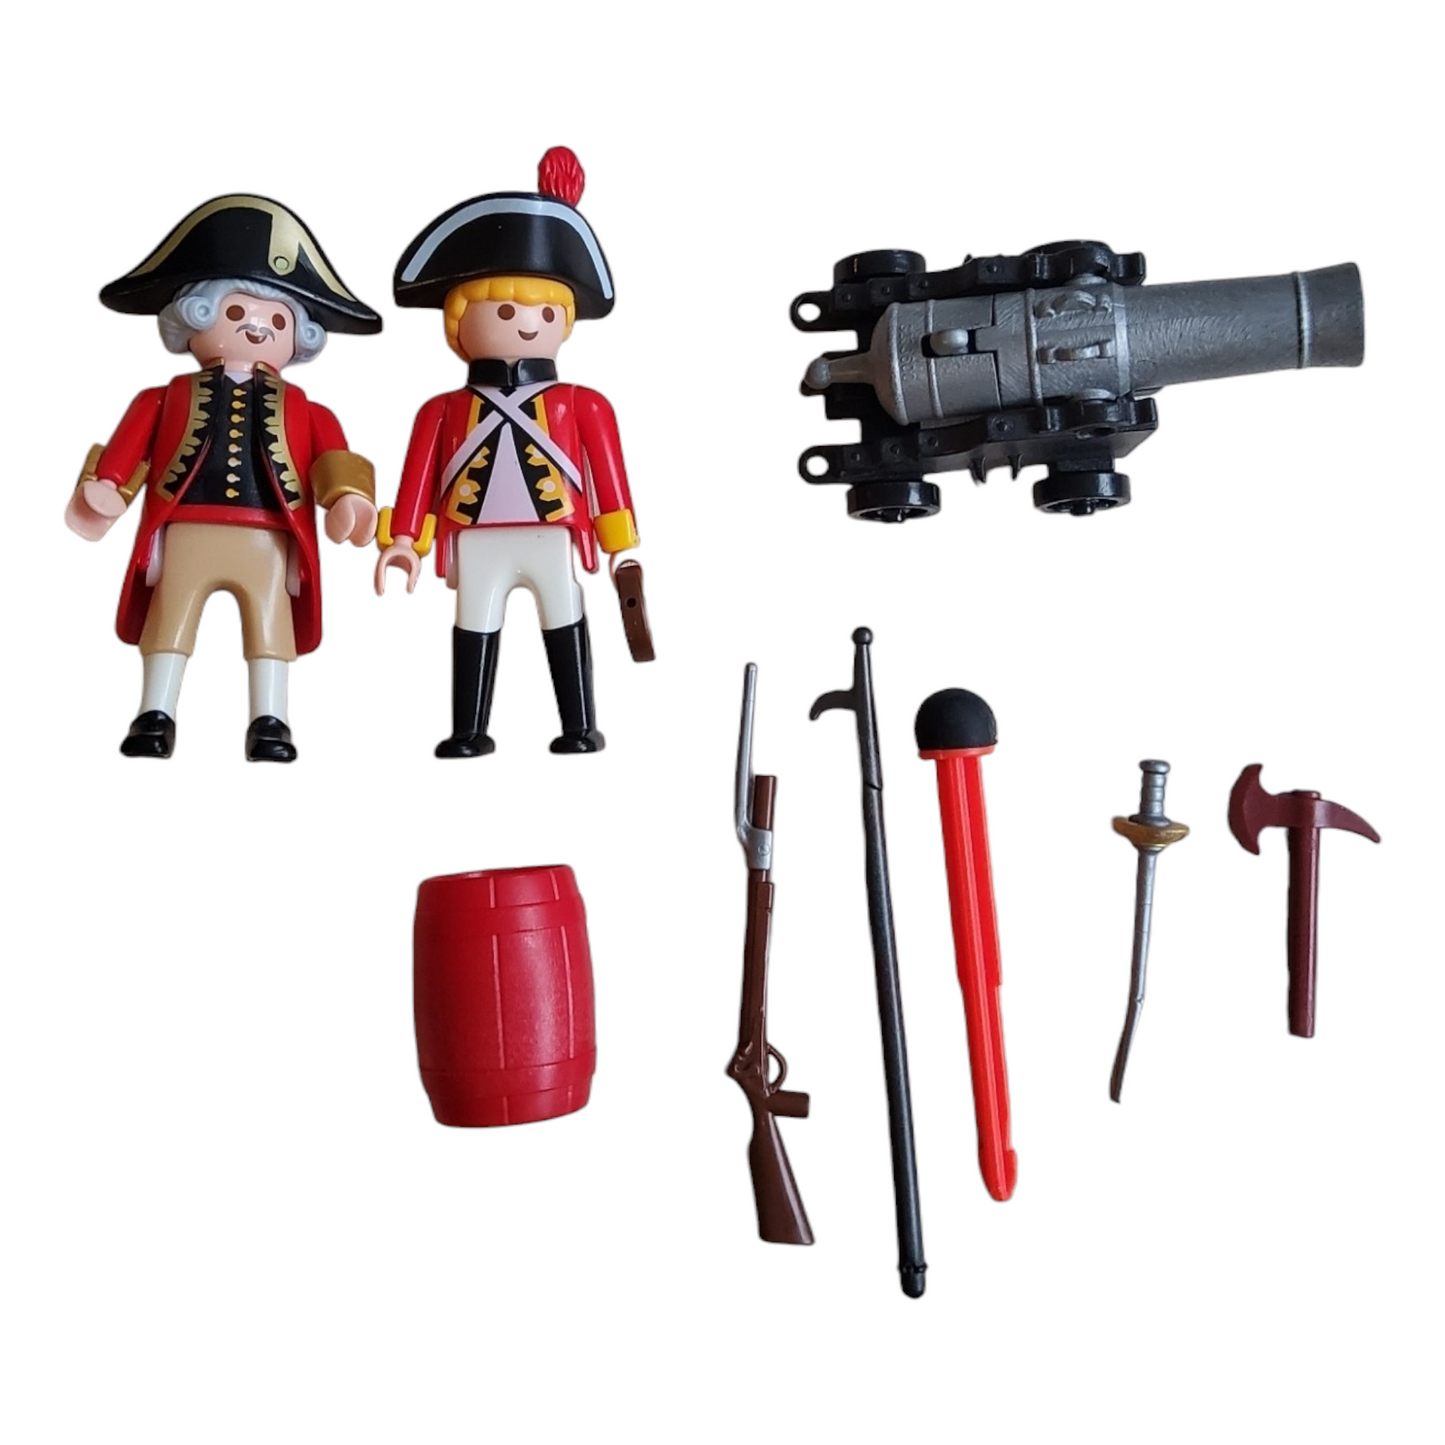 Playmobil ® British soldiers' ship - 5140